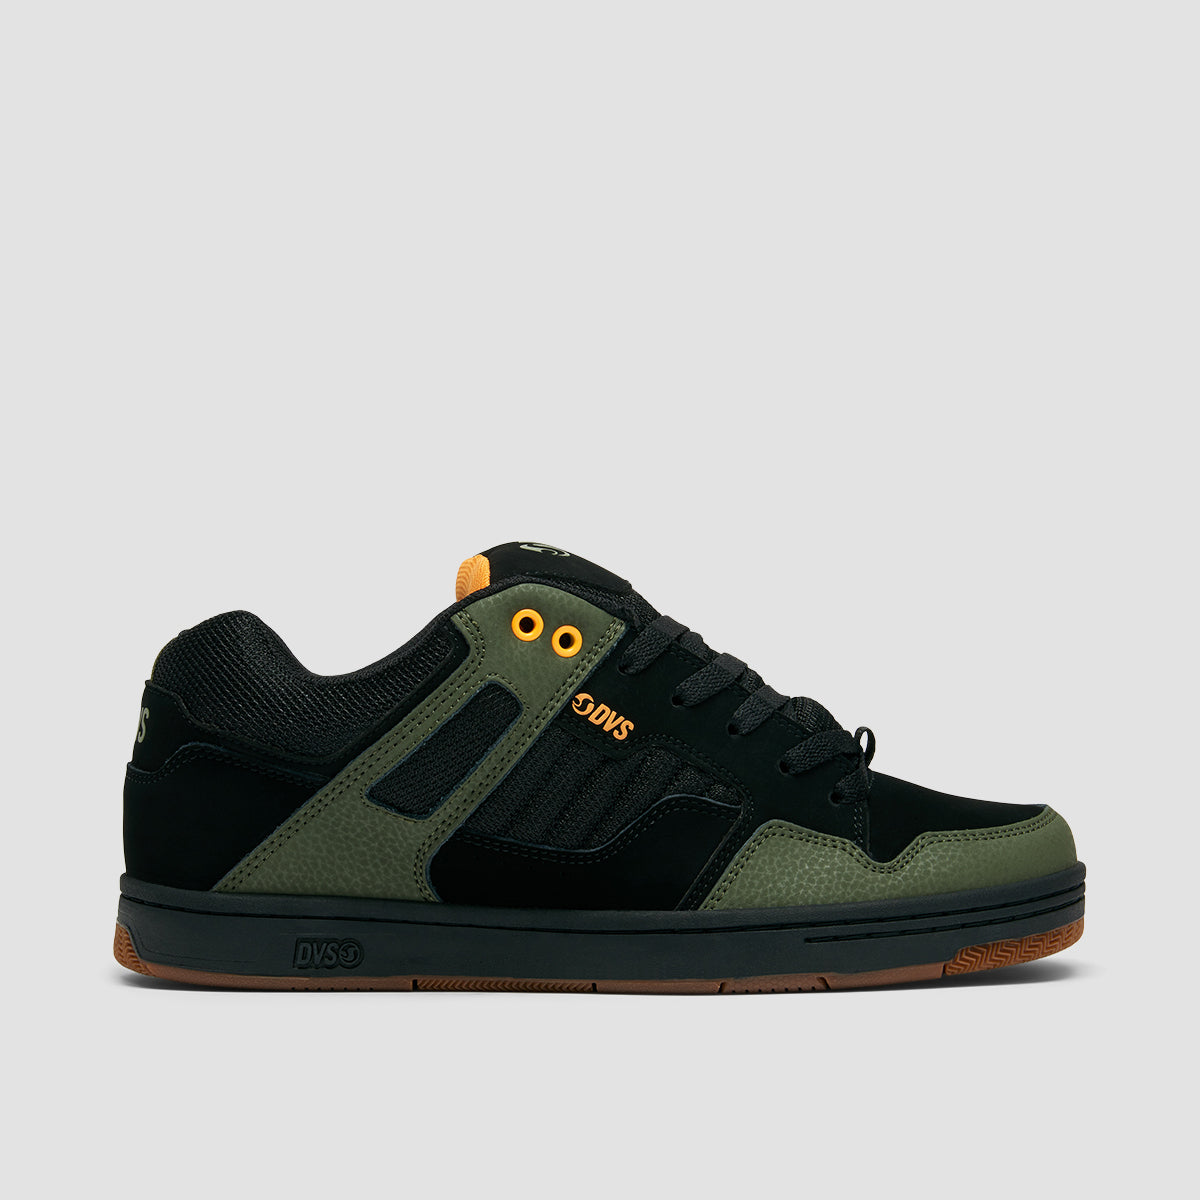 DVS Enduro 125 Shoes - Black/Olive Leather